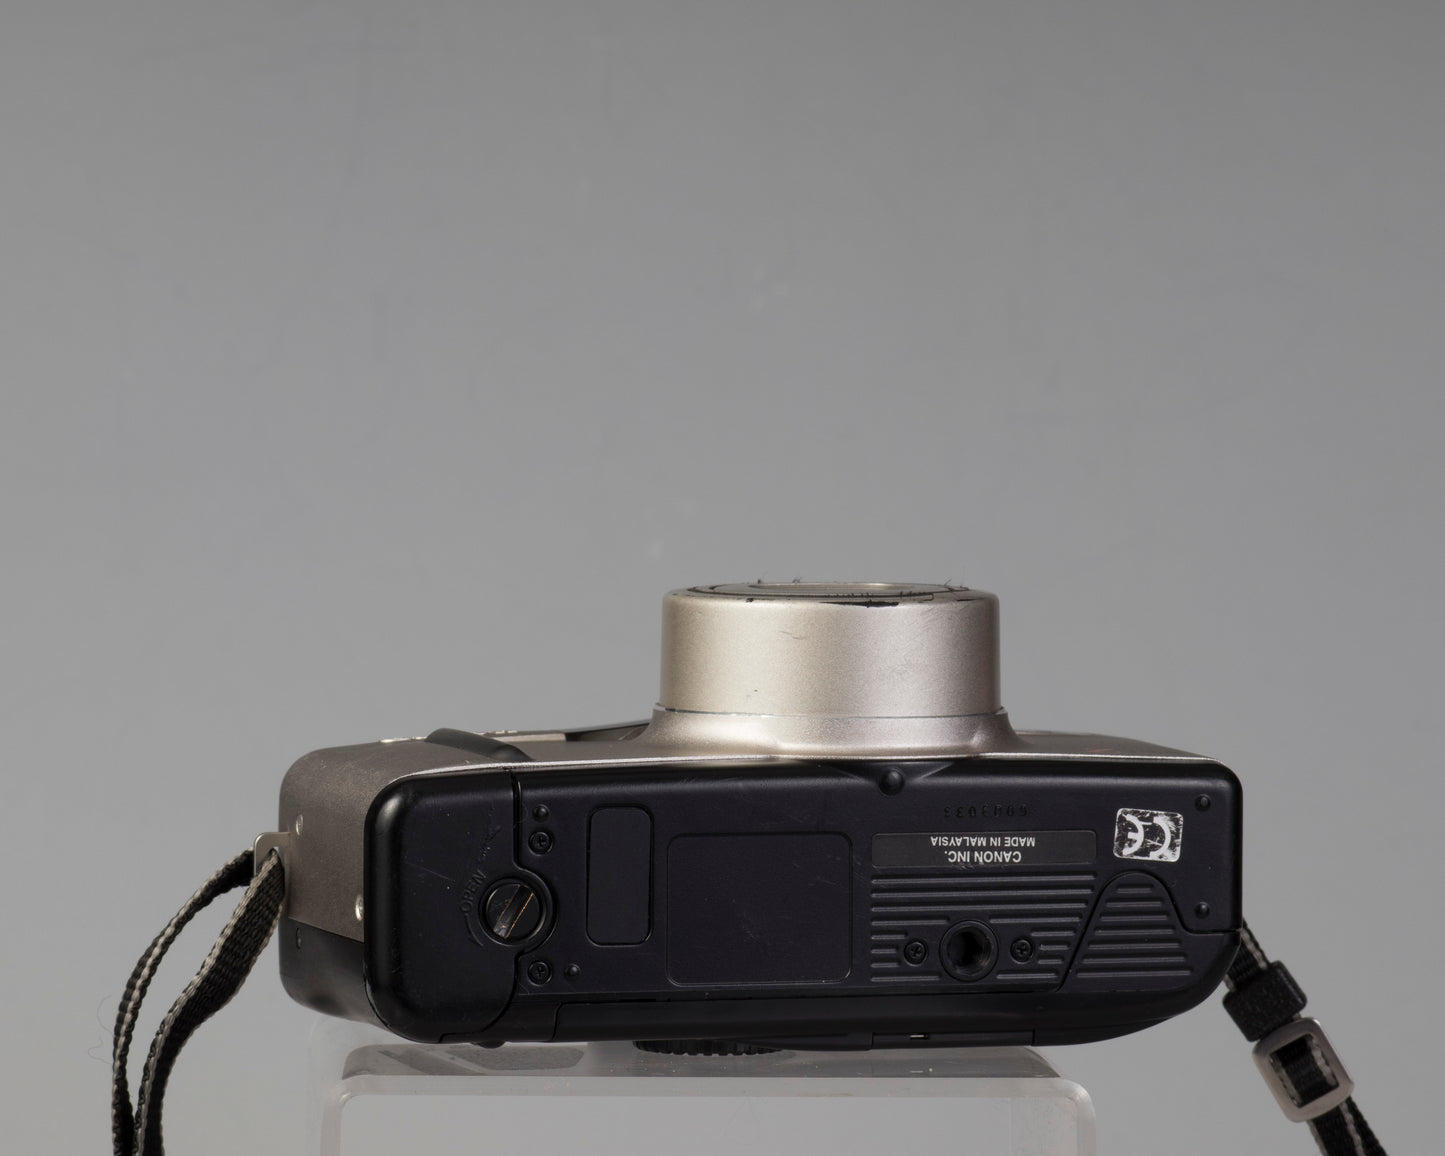 Canon Sure Shot Z135 35mm film camera (serial 6003033)